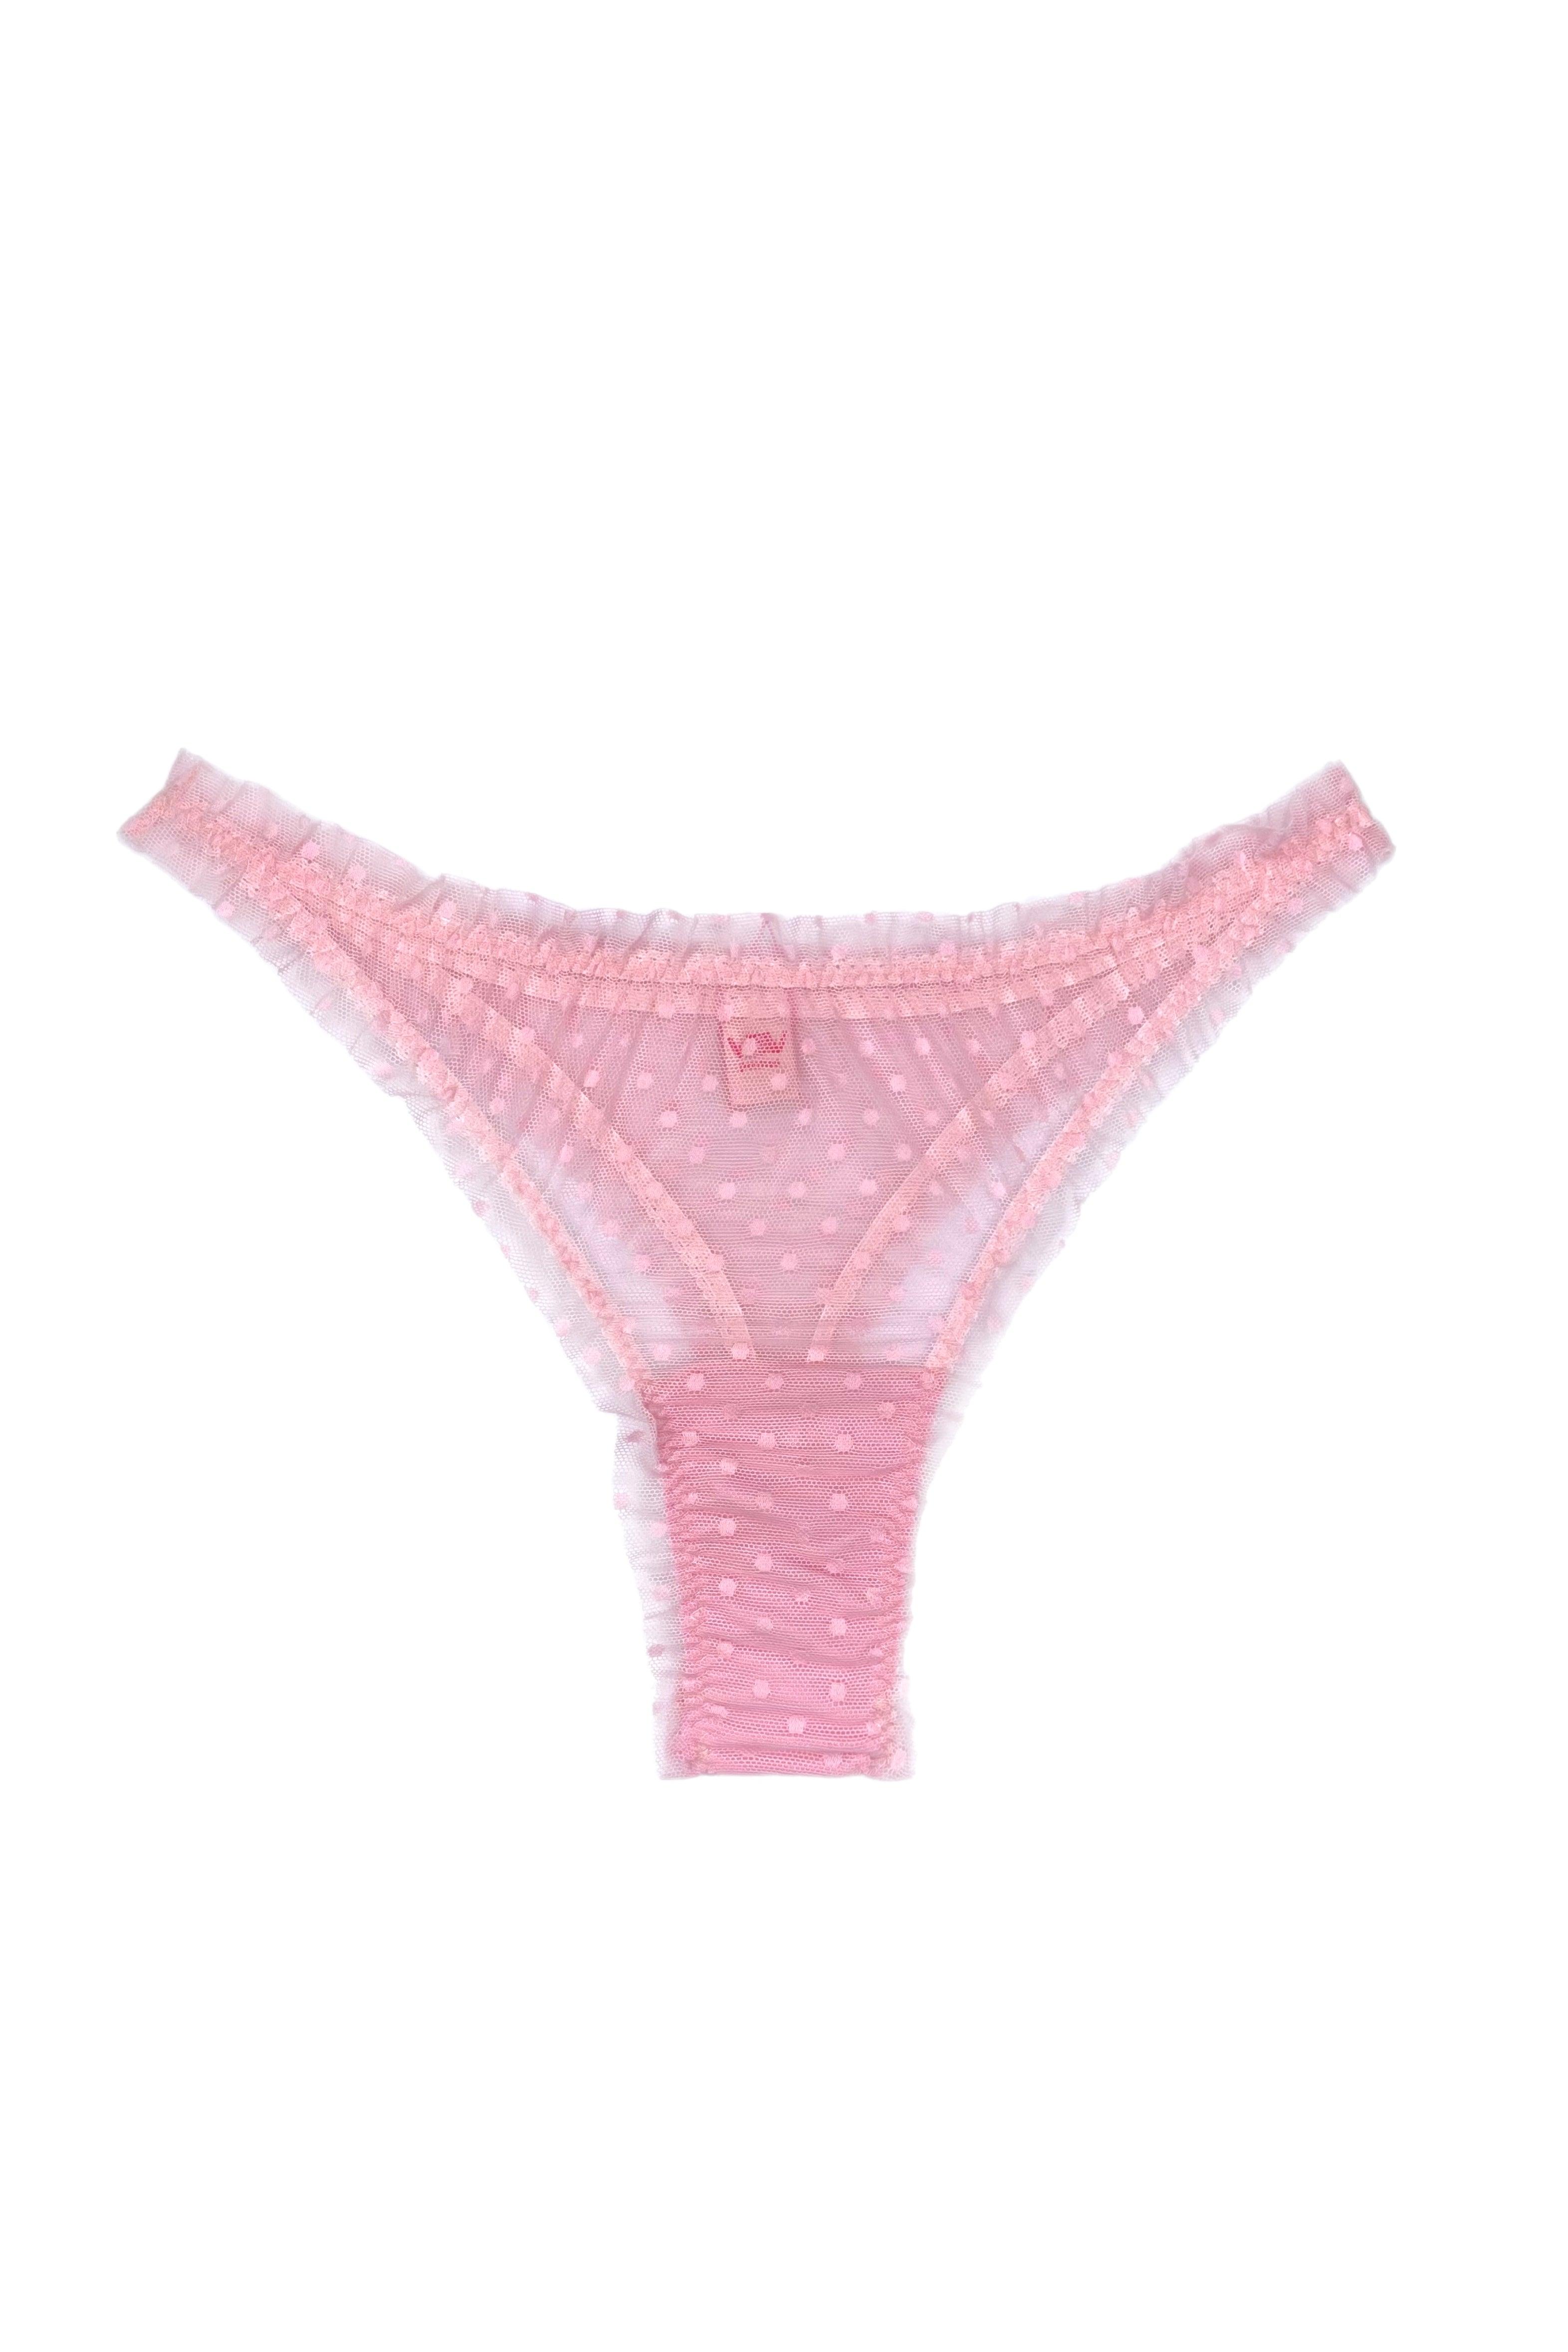 Mimi Pink dots high waisted thongs - yesUndress